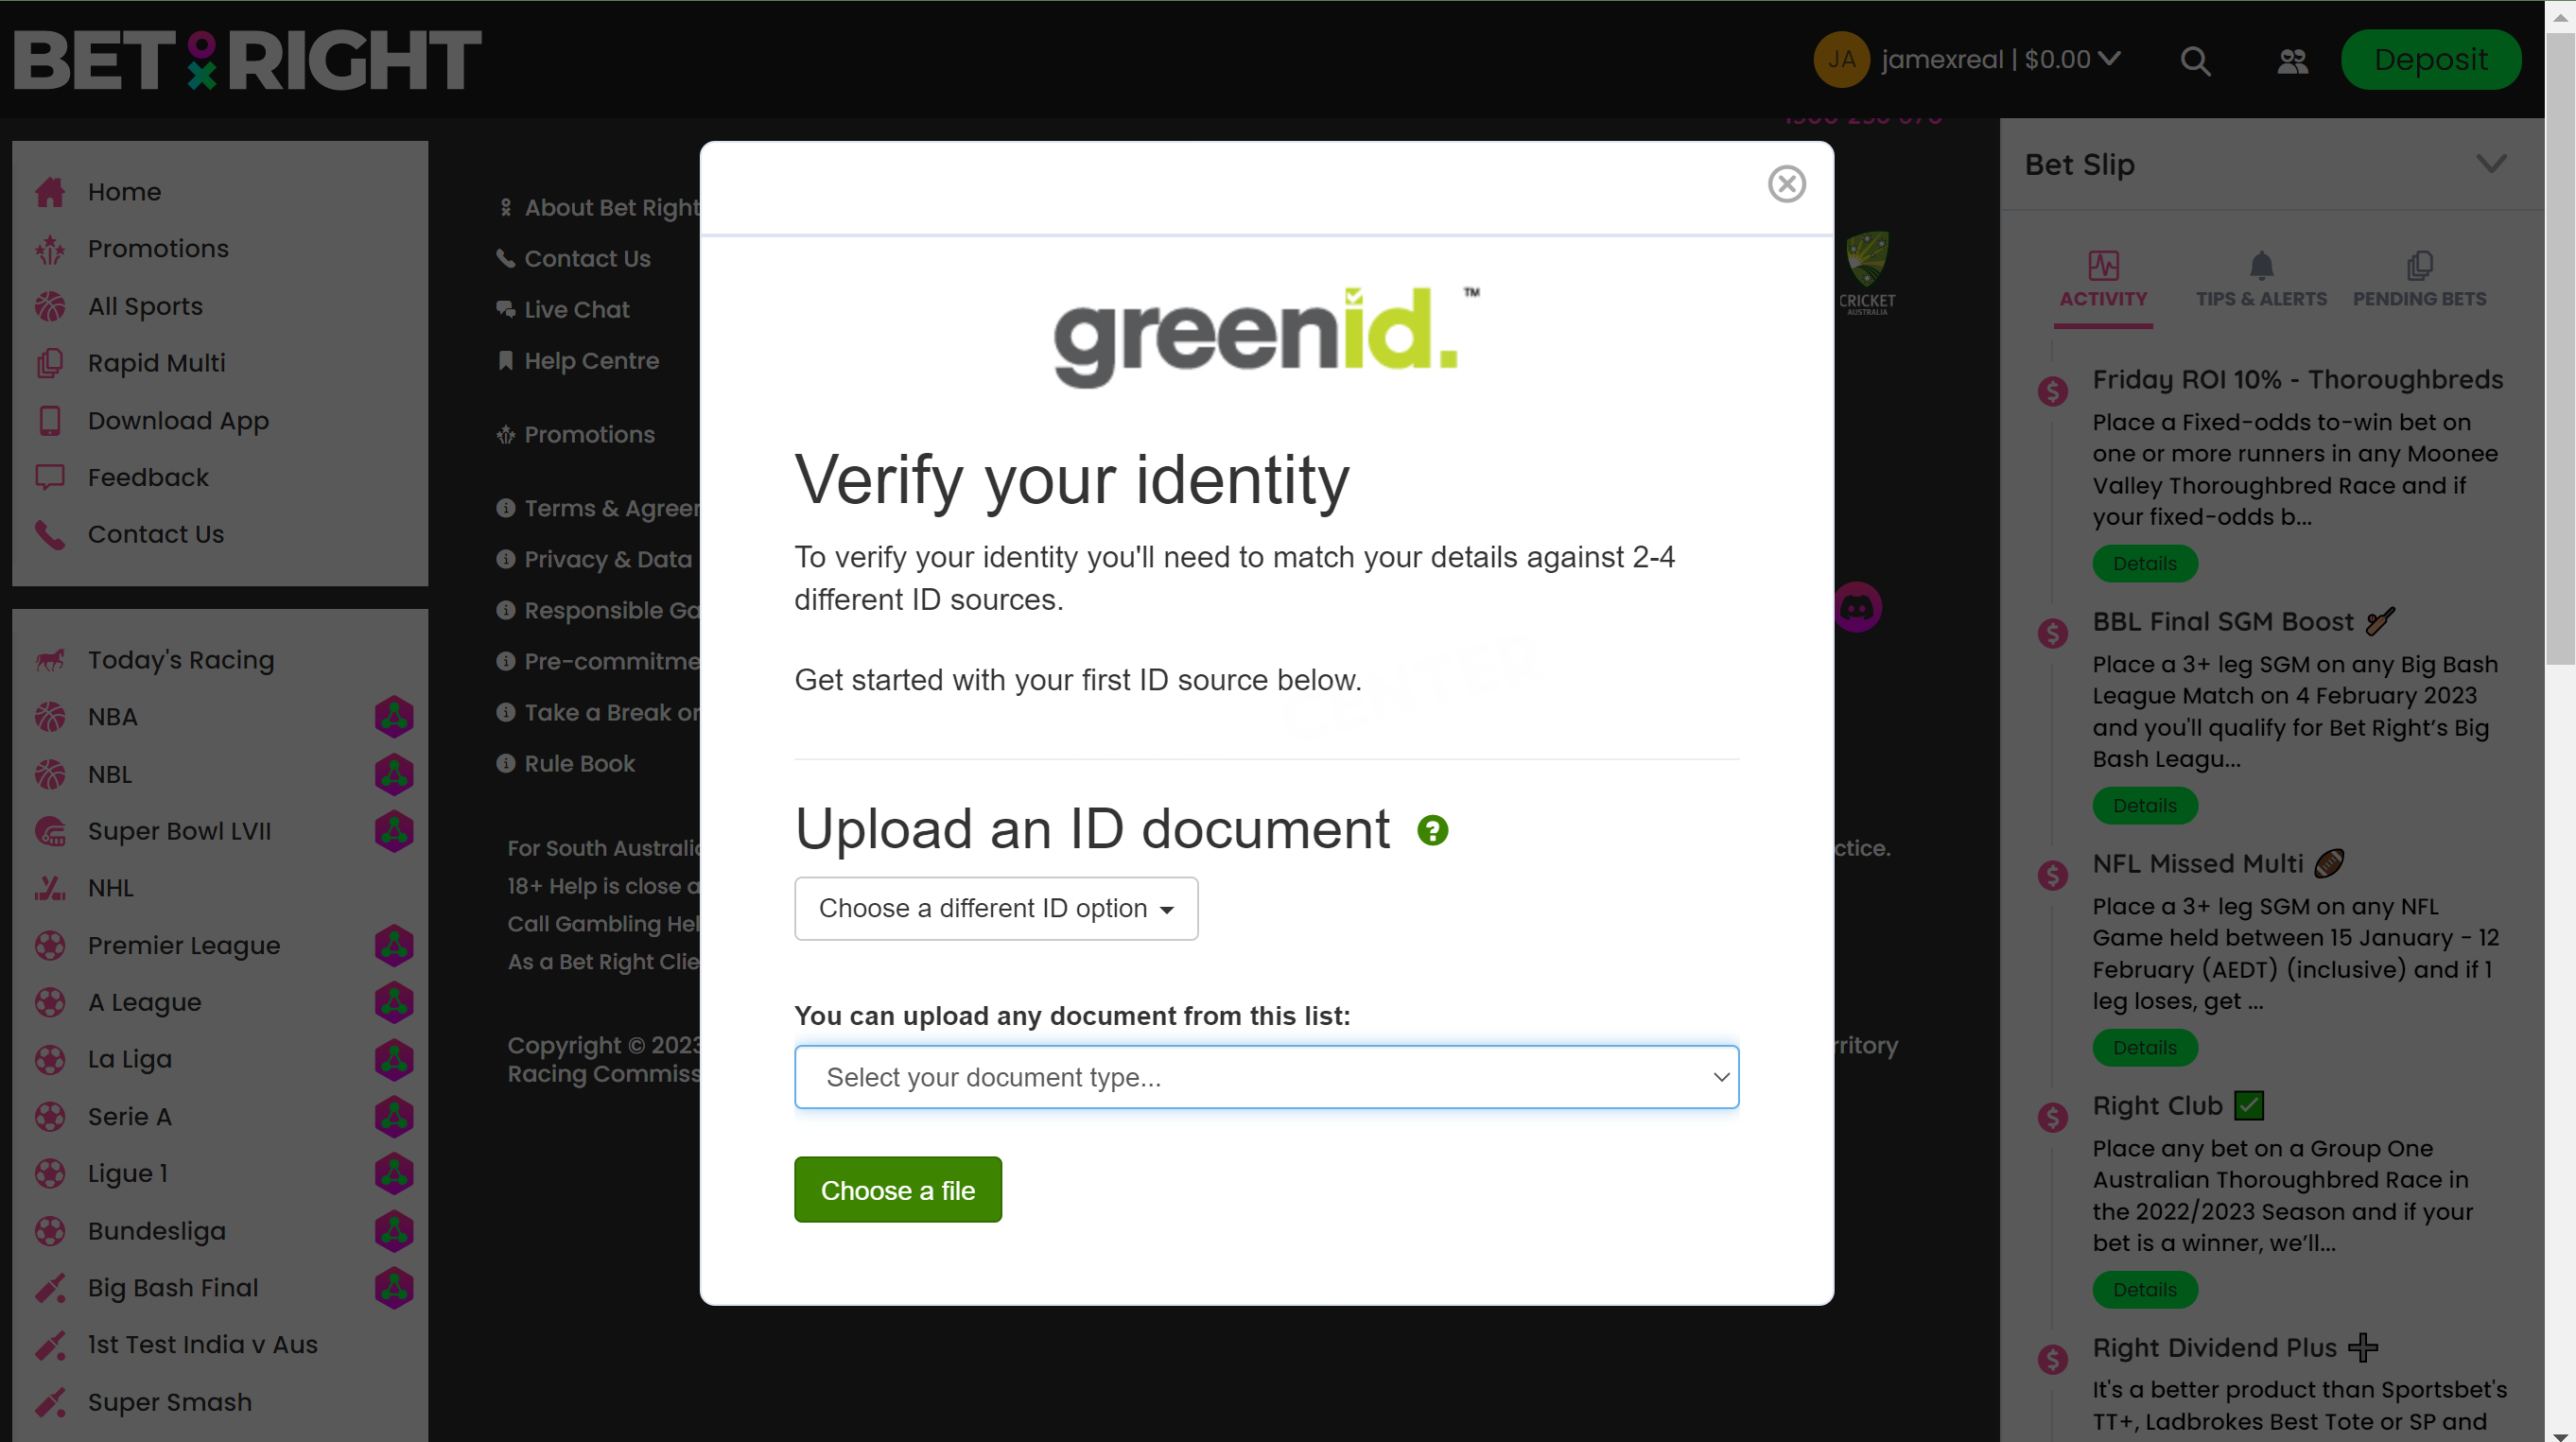 Verification by uploading a document